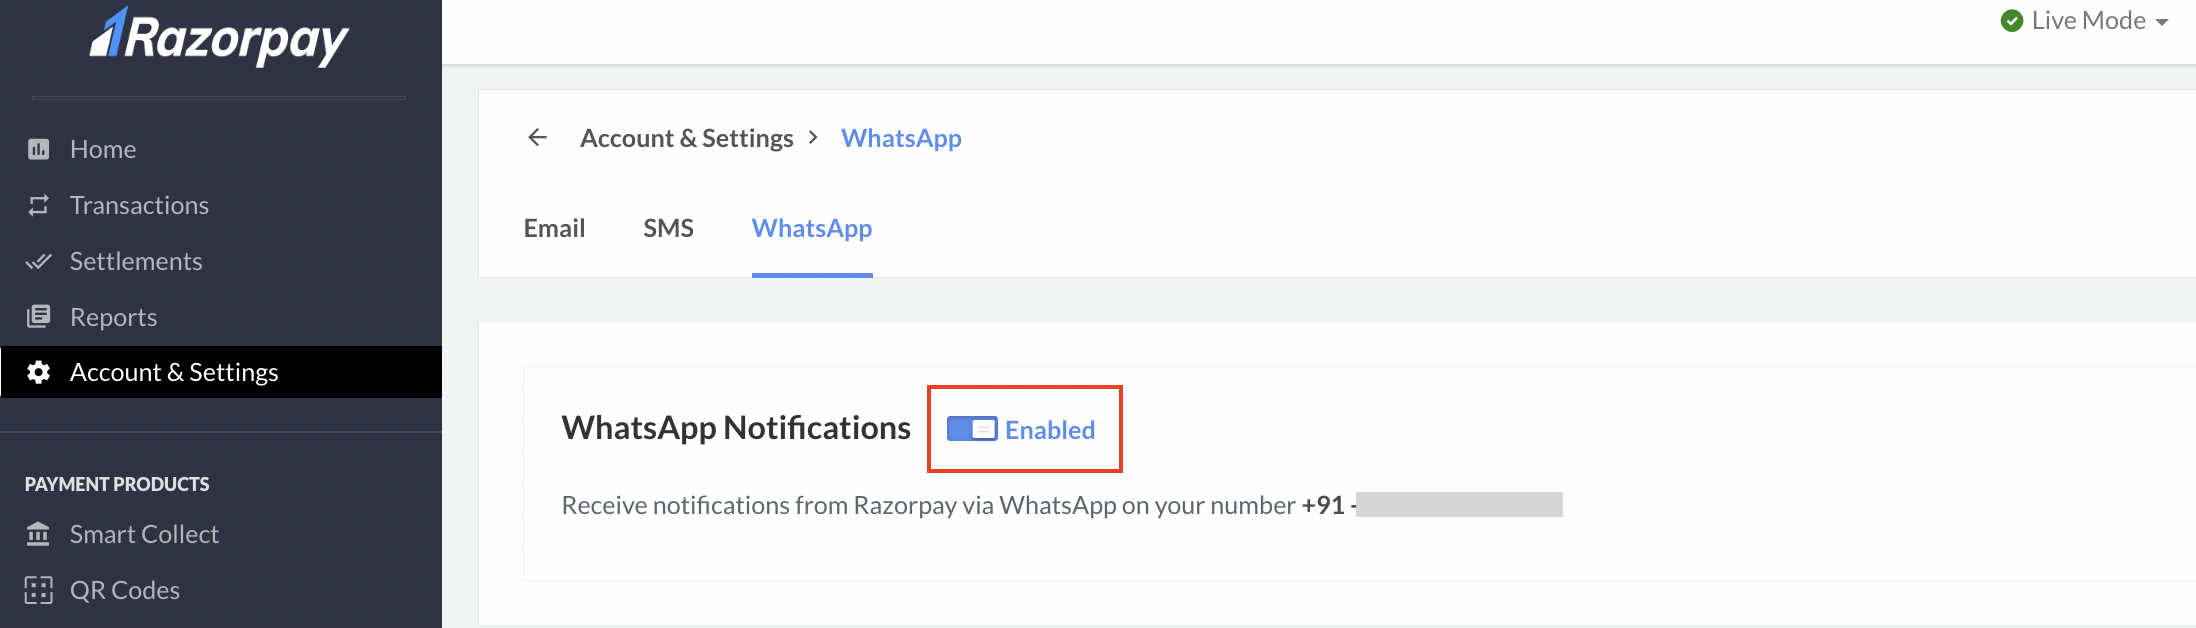 Manage WhatsApp Notifications